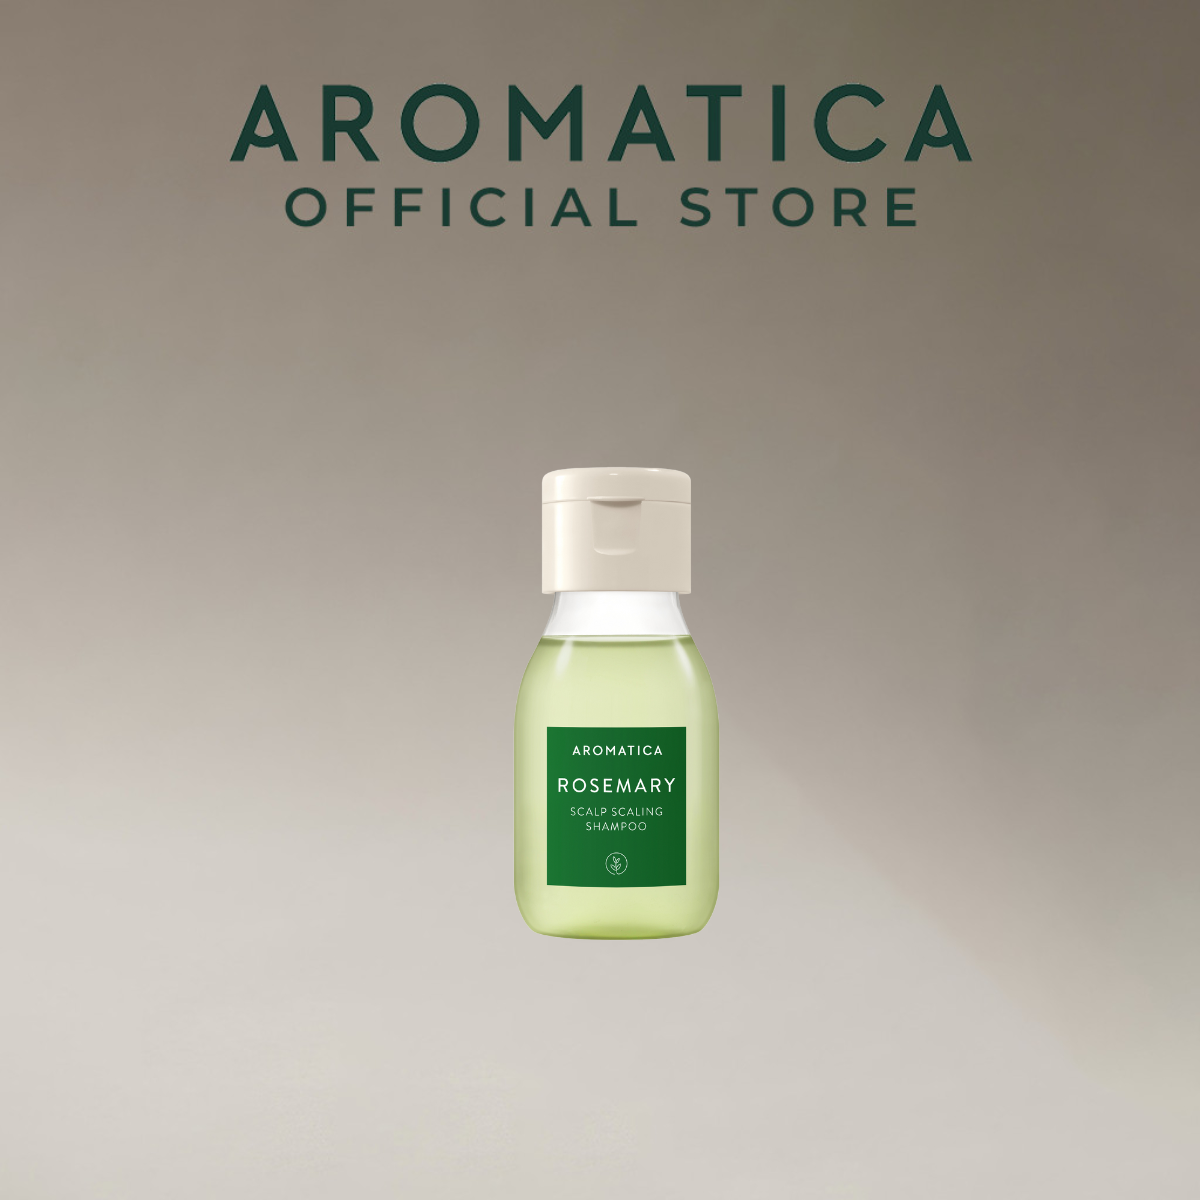 Aromatica Rosemary Salt Scrub Shampoo 500ml